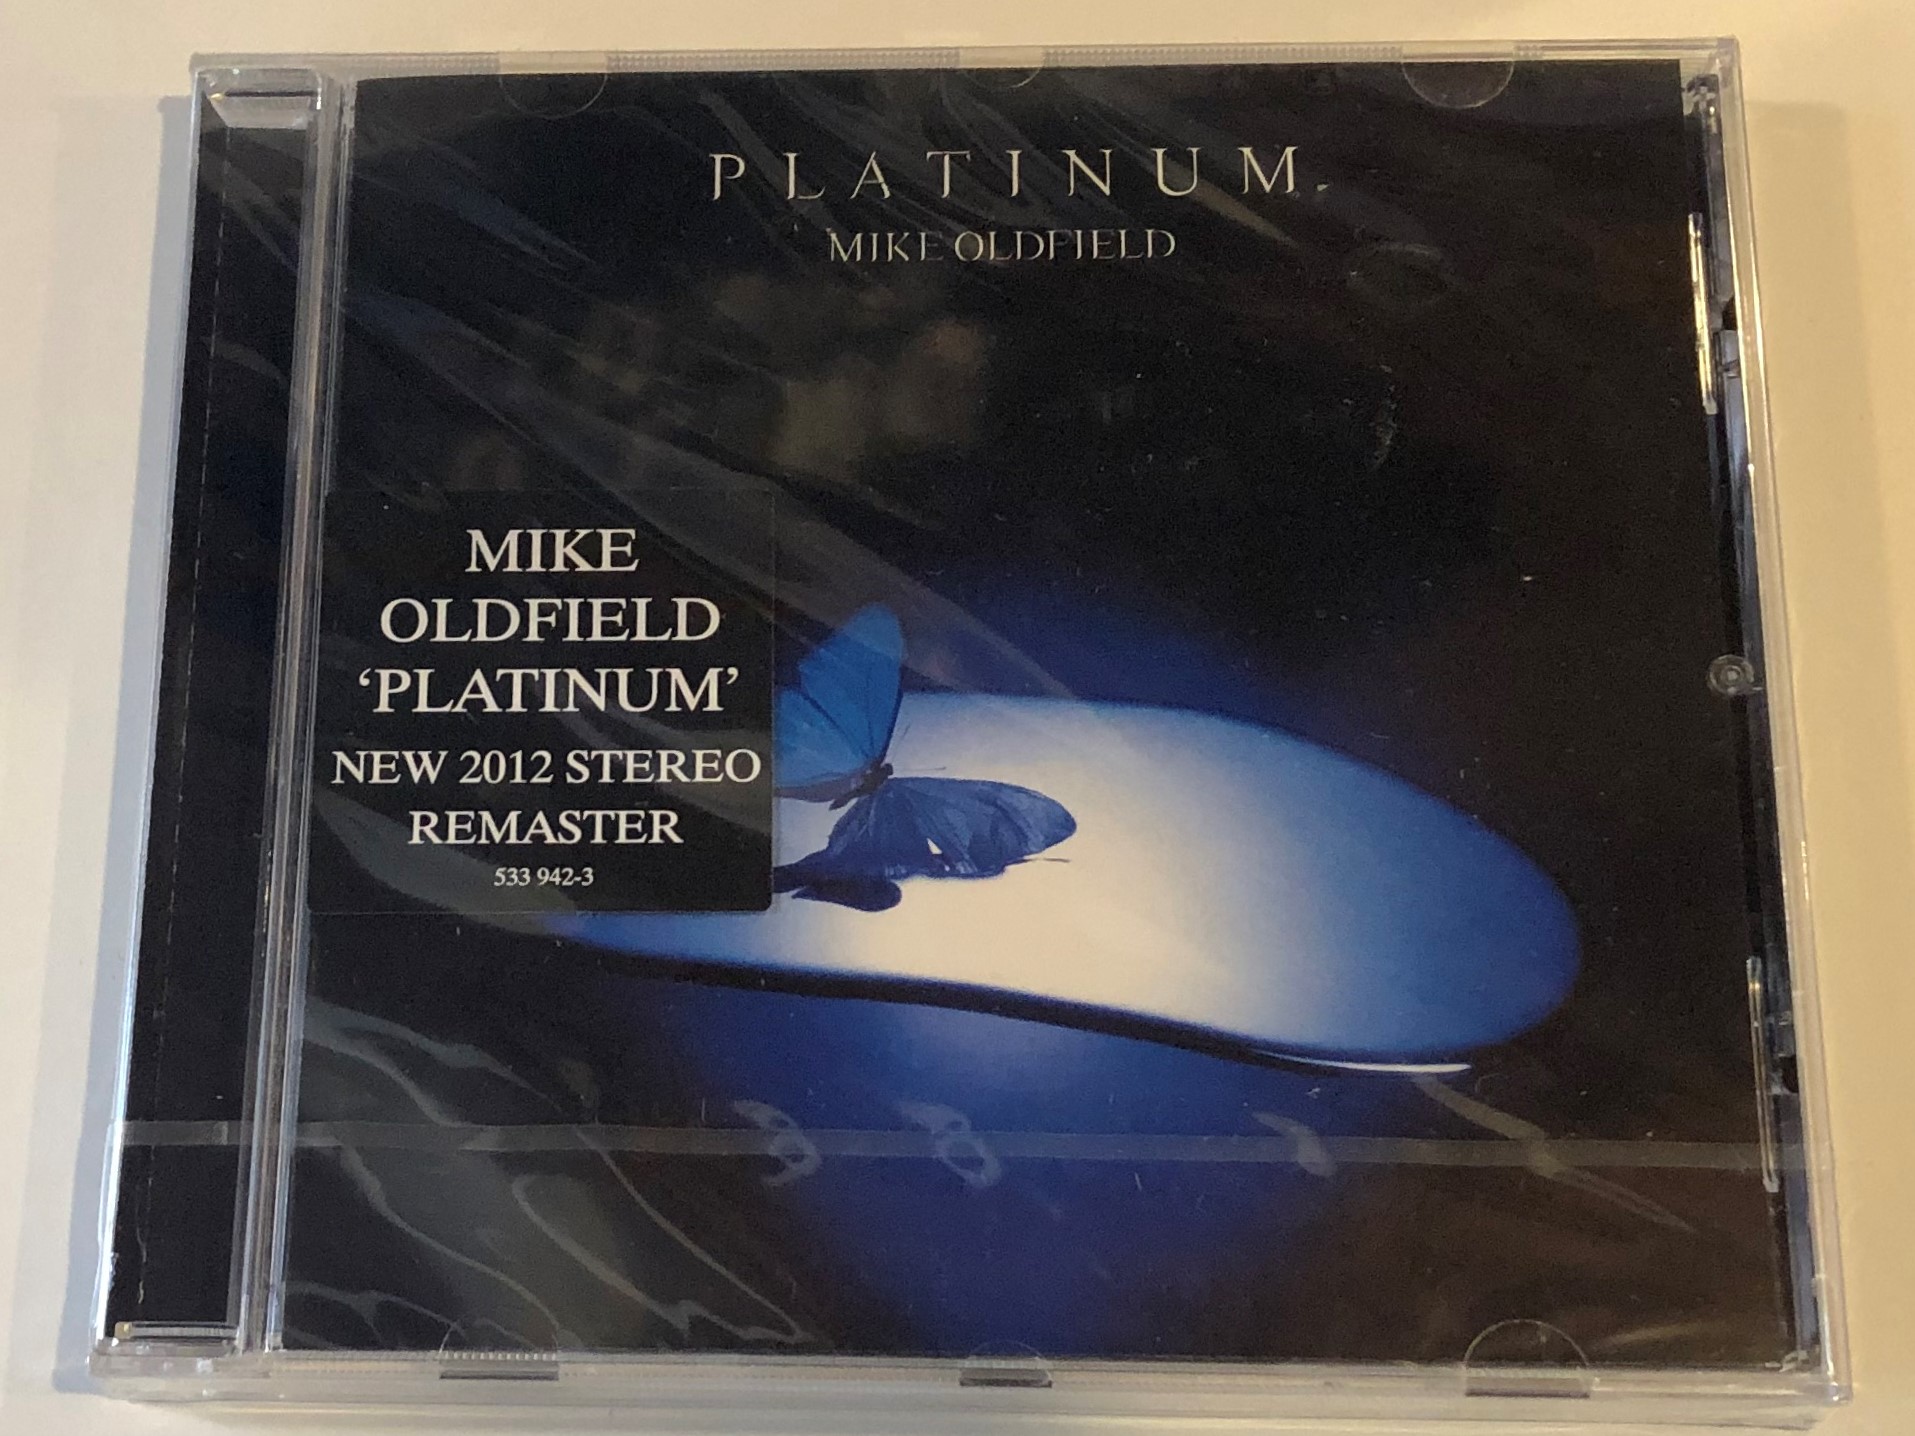 mike-oldfield-platinum-new-2012-stereo-remaster-universal-umc-audio-cd-2012-stereo-533-942-3-1-.jpg